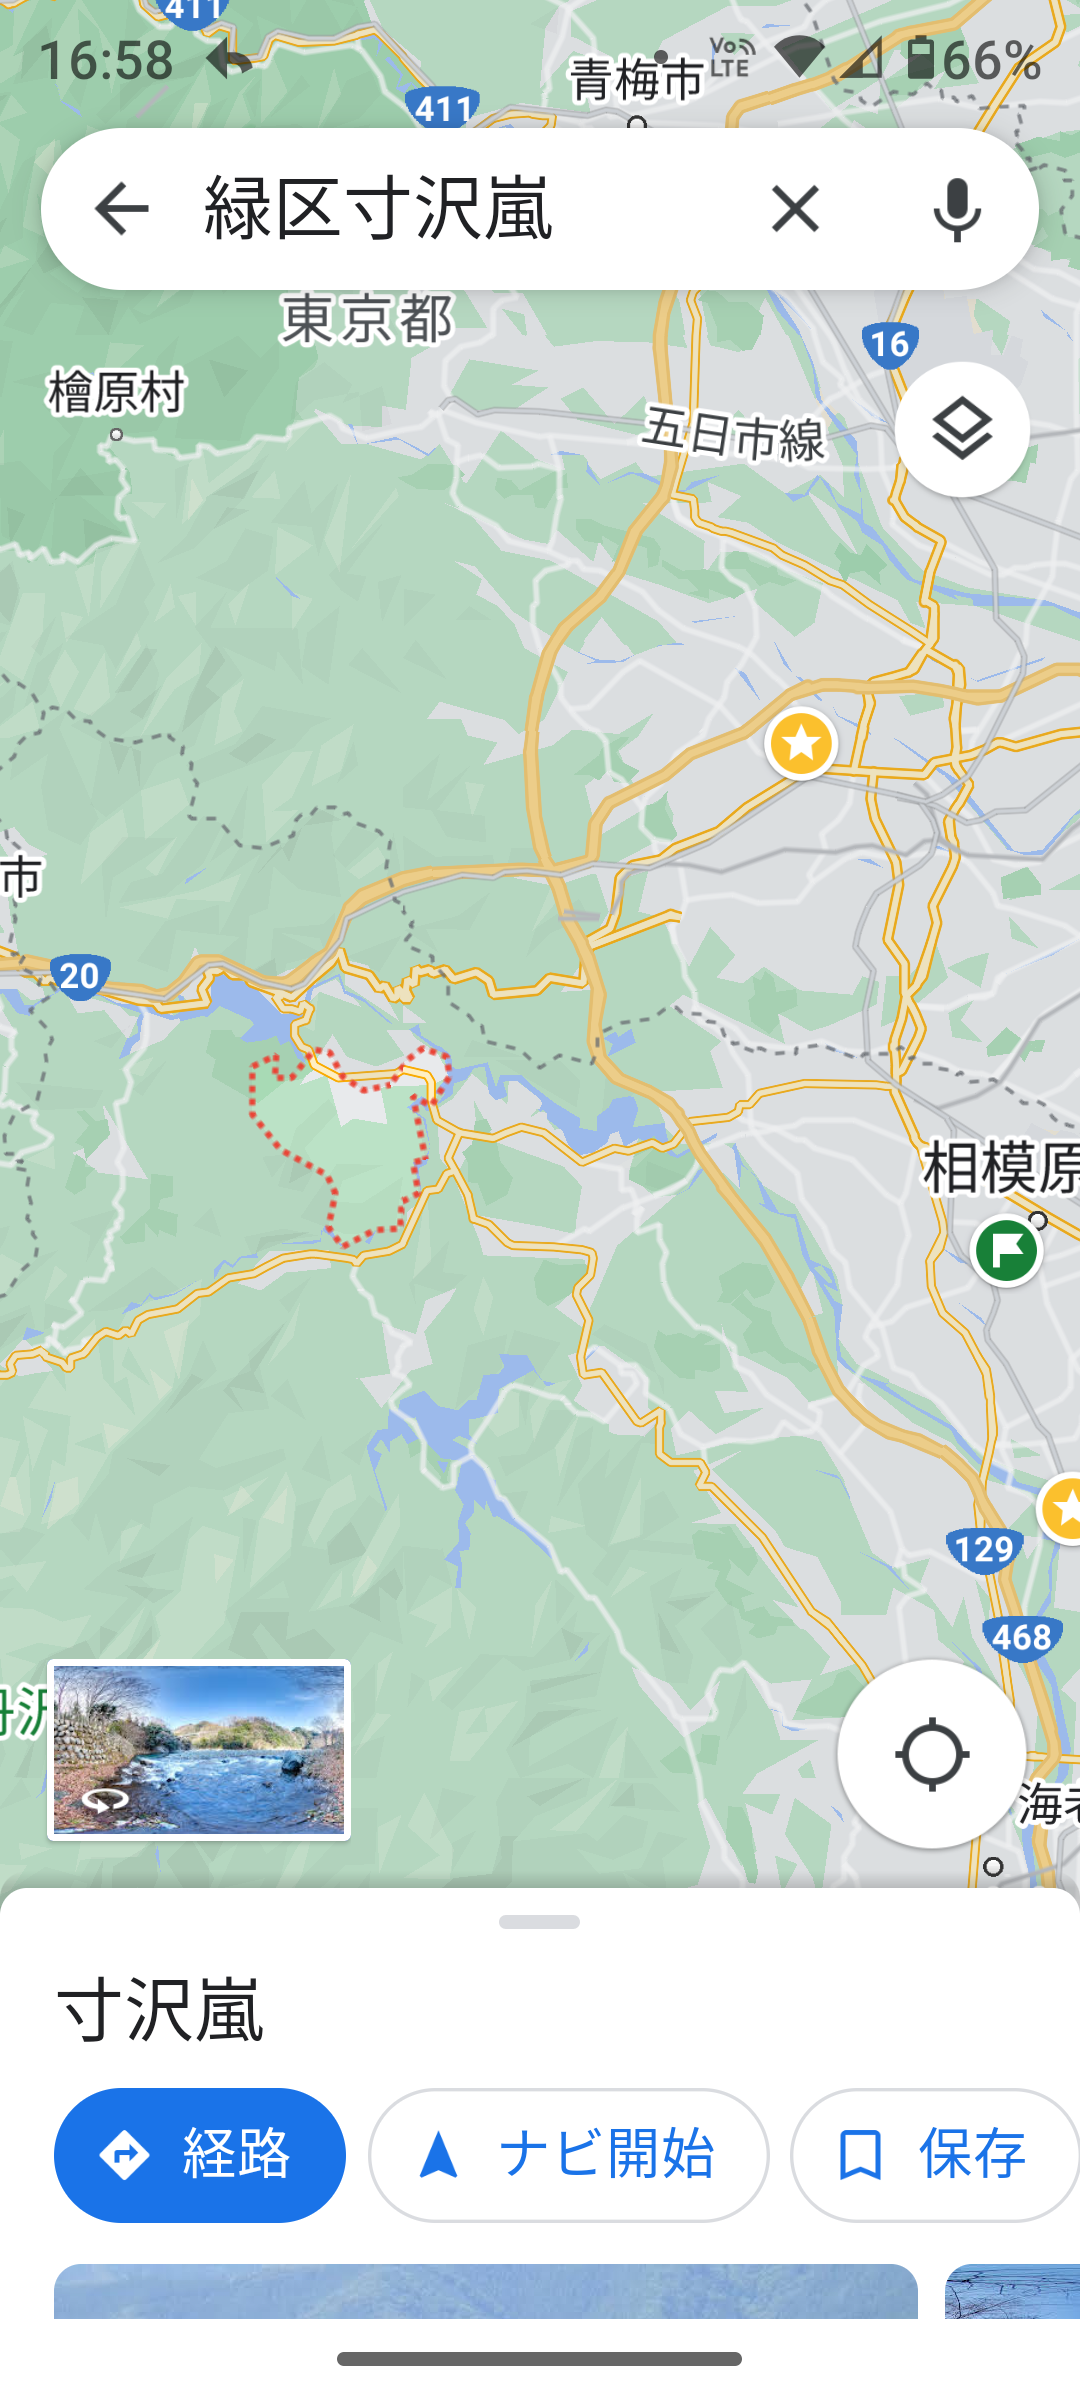 【朗報】神奈川県に家賃1万5千円で住める賃貸登場wwwwwwwww\n_1